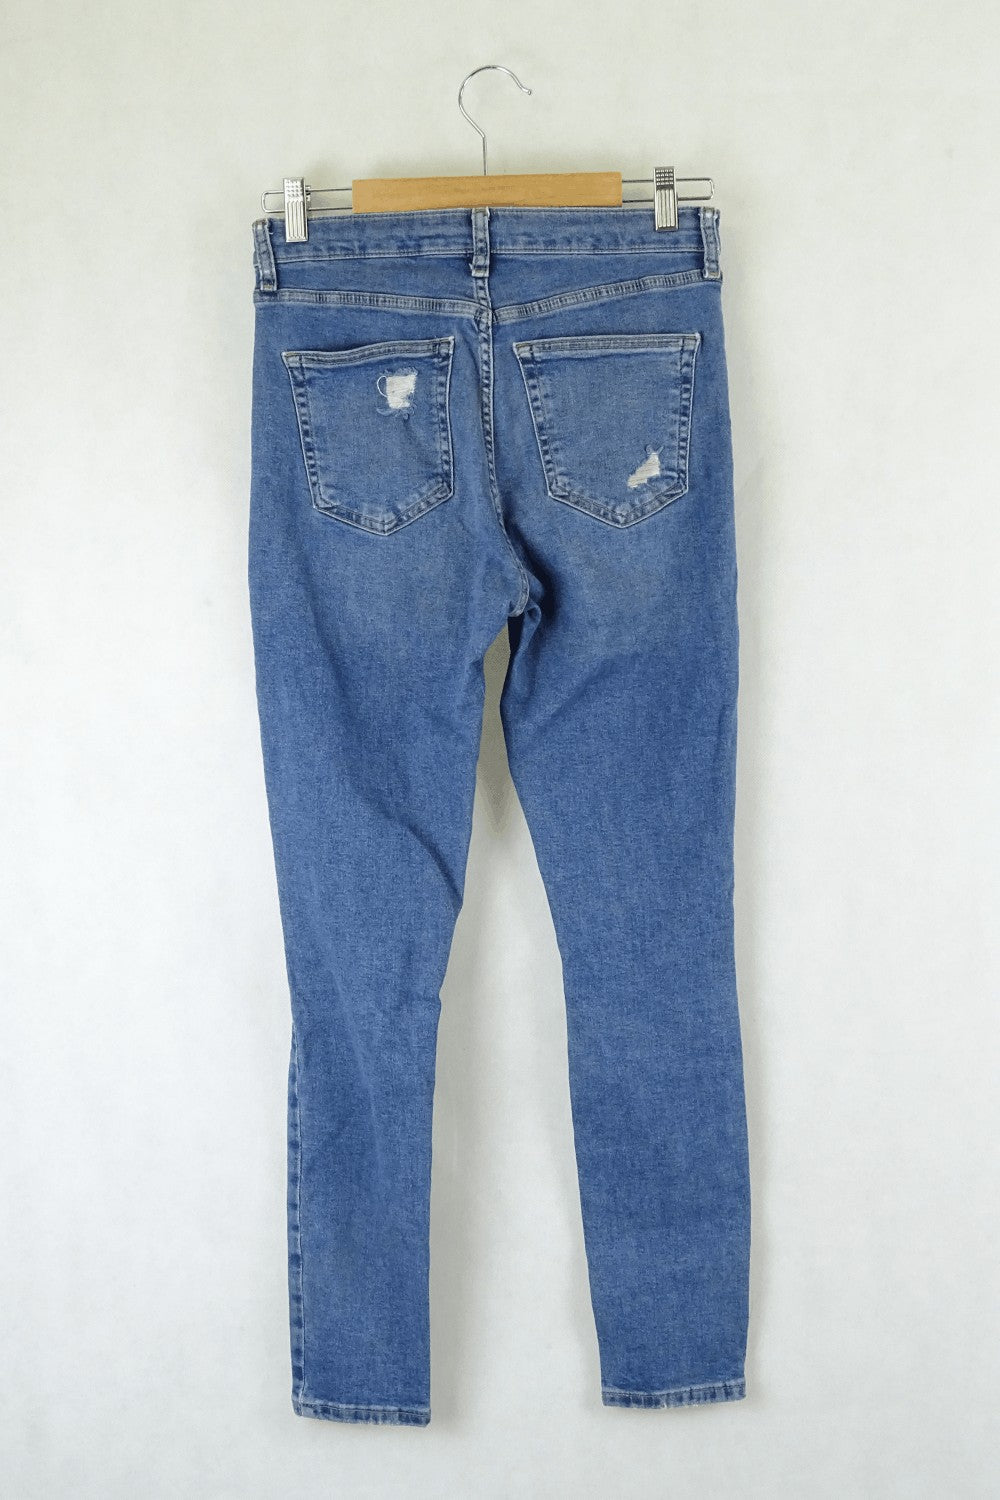 Topshop Denim Jeans 8